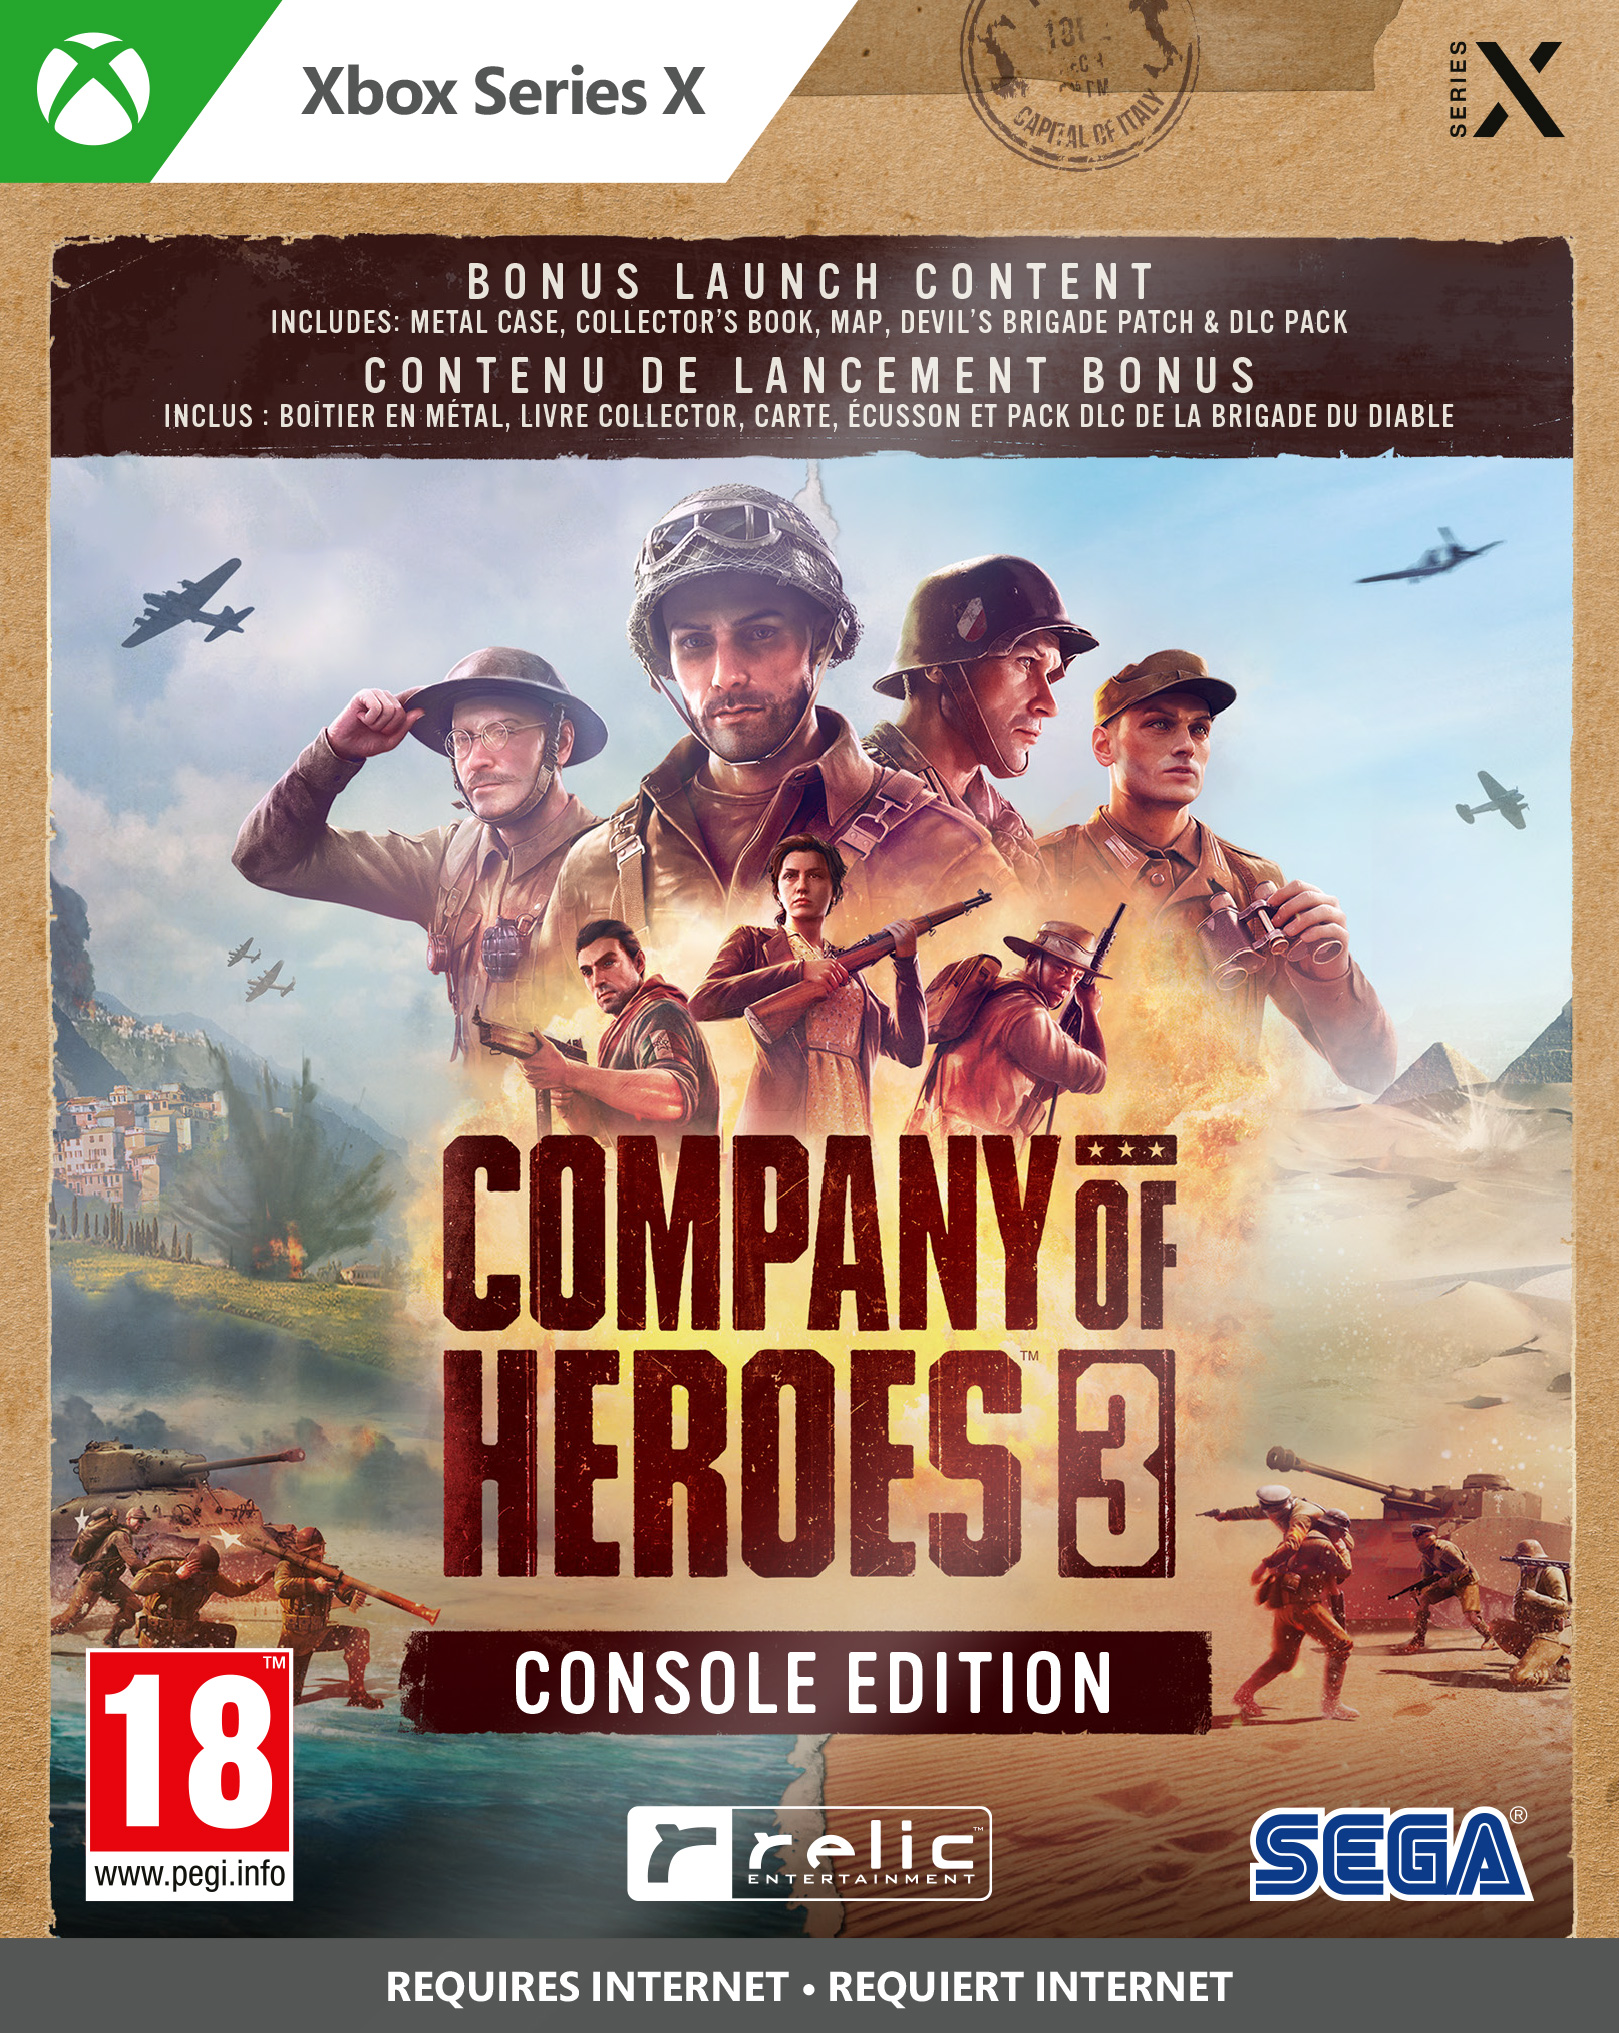 Xbox Series X Company of Heroes 3 - Metalcase Edition